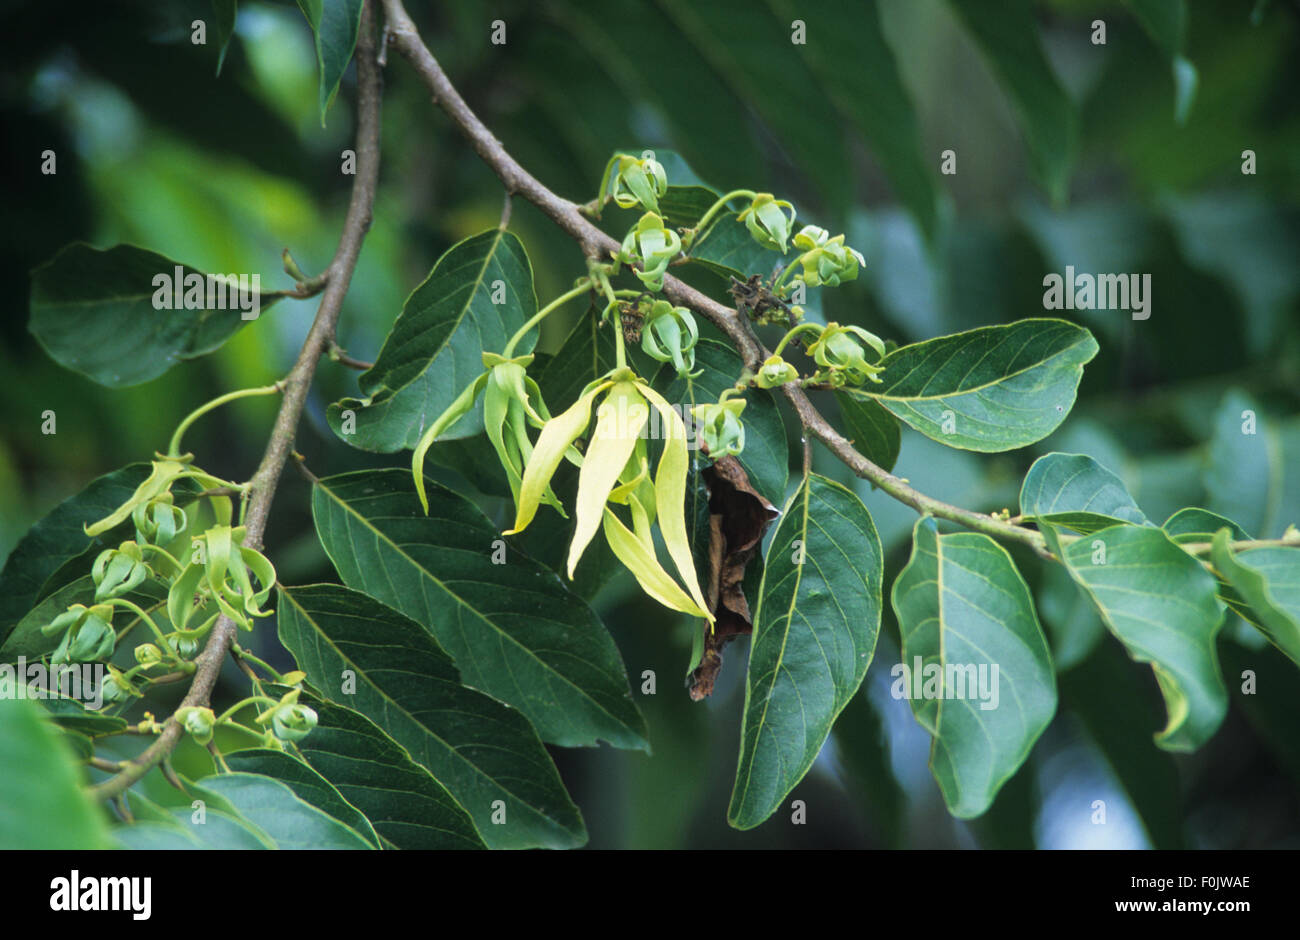 Ylang ylang flower growing on branch Guerlain perfume plantation Grande Terre, Mayotte island Comoro Archipelago, Indian Ocean Stock Photo